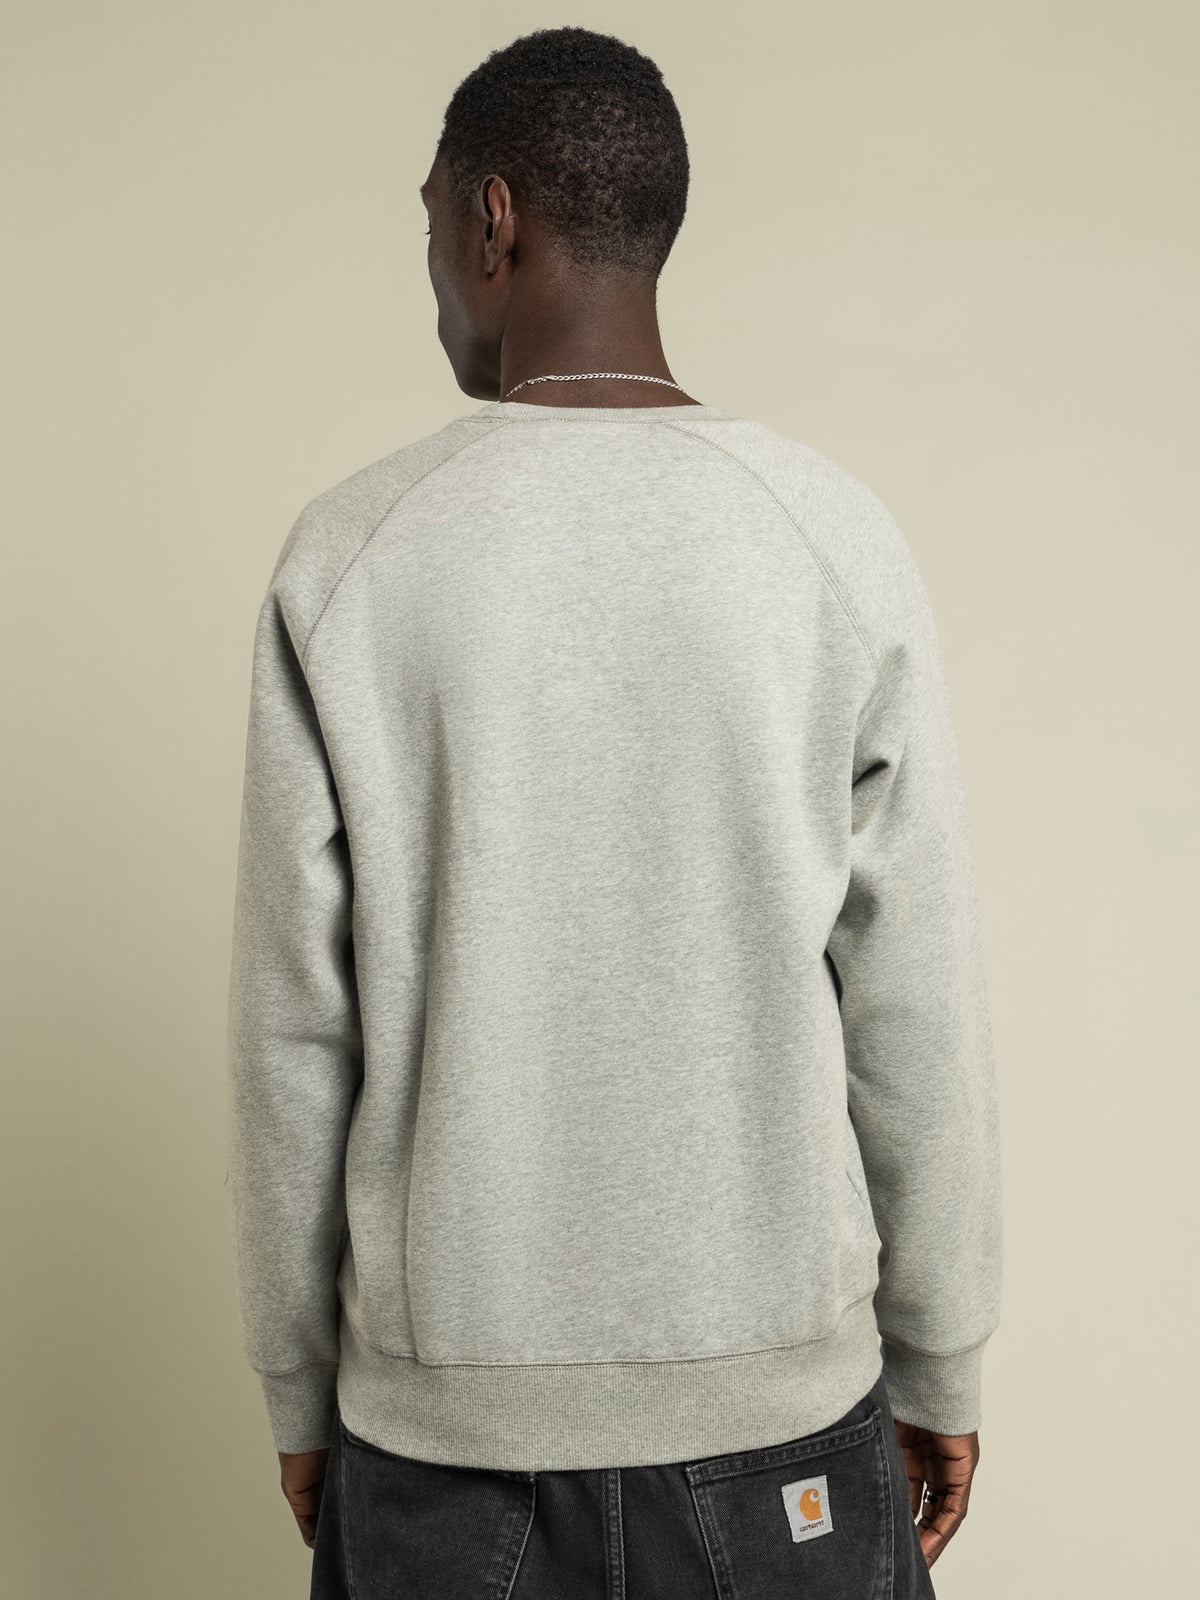 Chase Sweatshirt in Grey